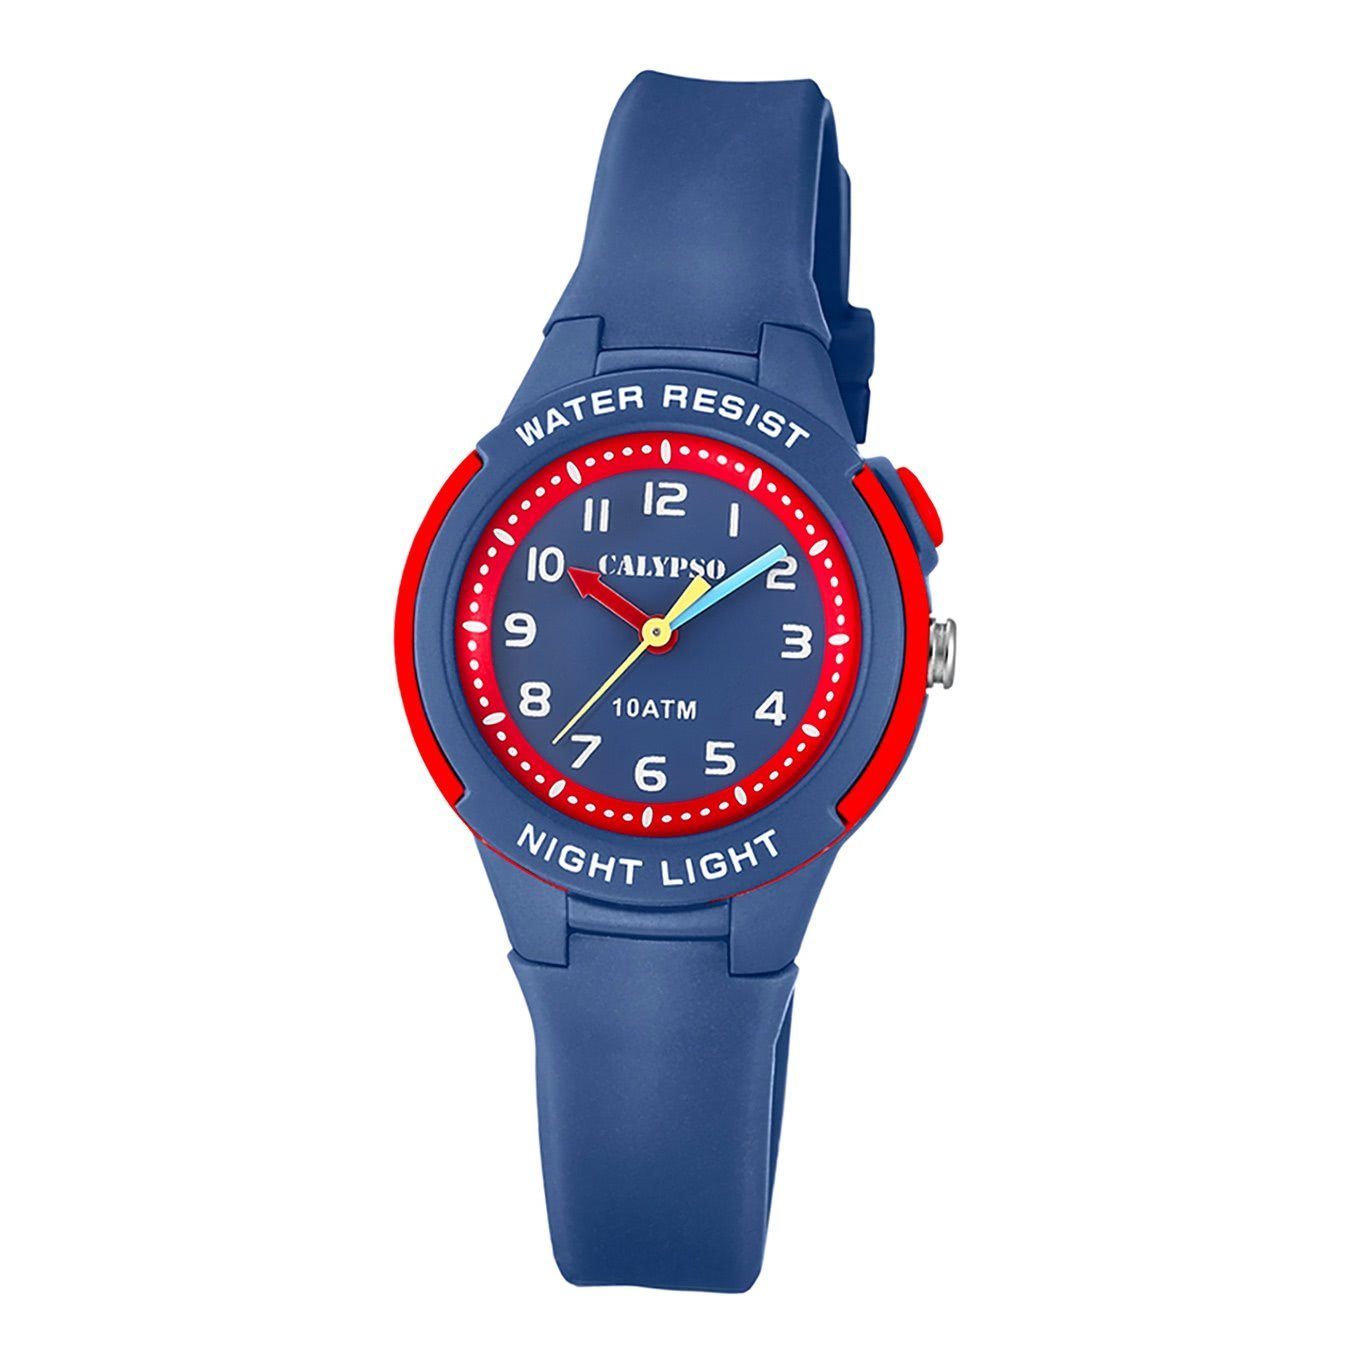 CALYPSO WATCHES Quarzuhr Fashion Kunststoff, Uhr rund, Calypso Kinder PURarmband Kinder K6069/5, dunkelblau, Armbanduhr